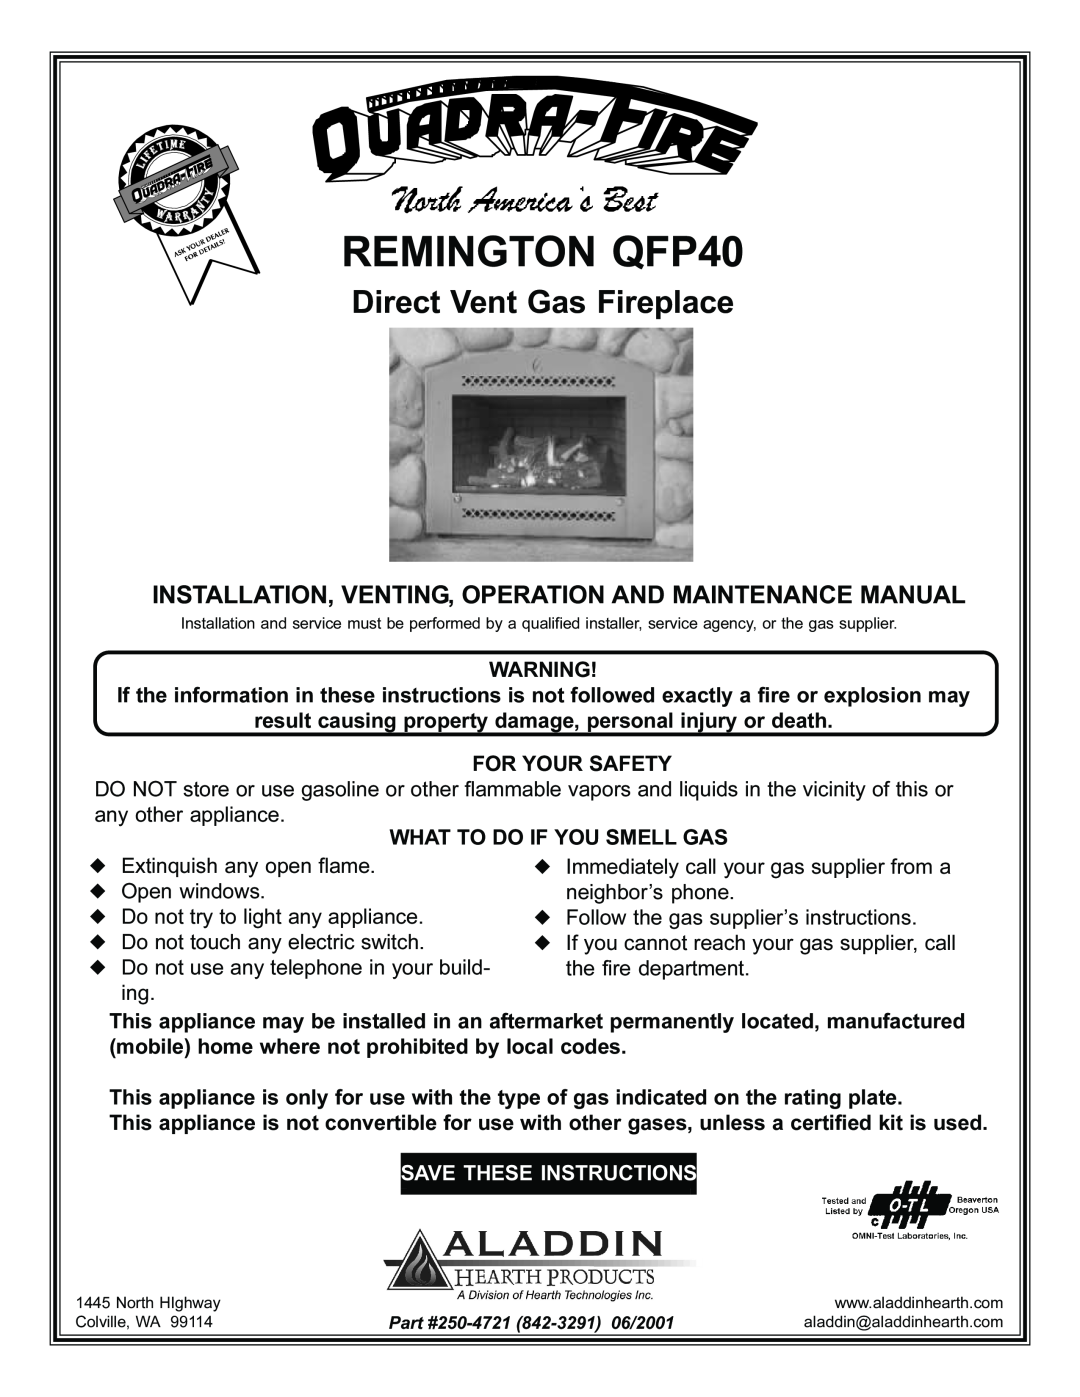 Remington manual REMINGTON QFP40, Direct Vent Gas Fireplace, Save These Instructions 